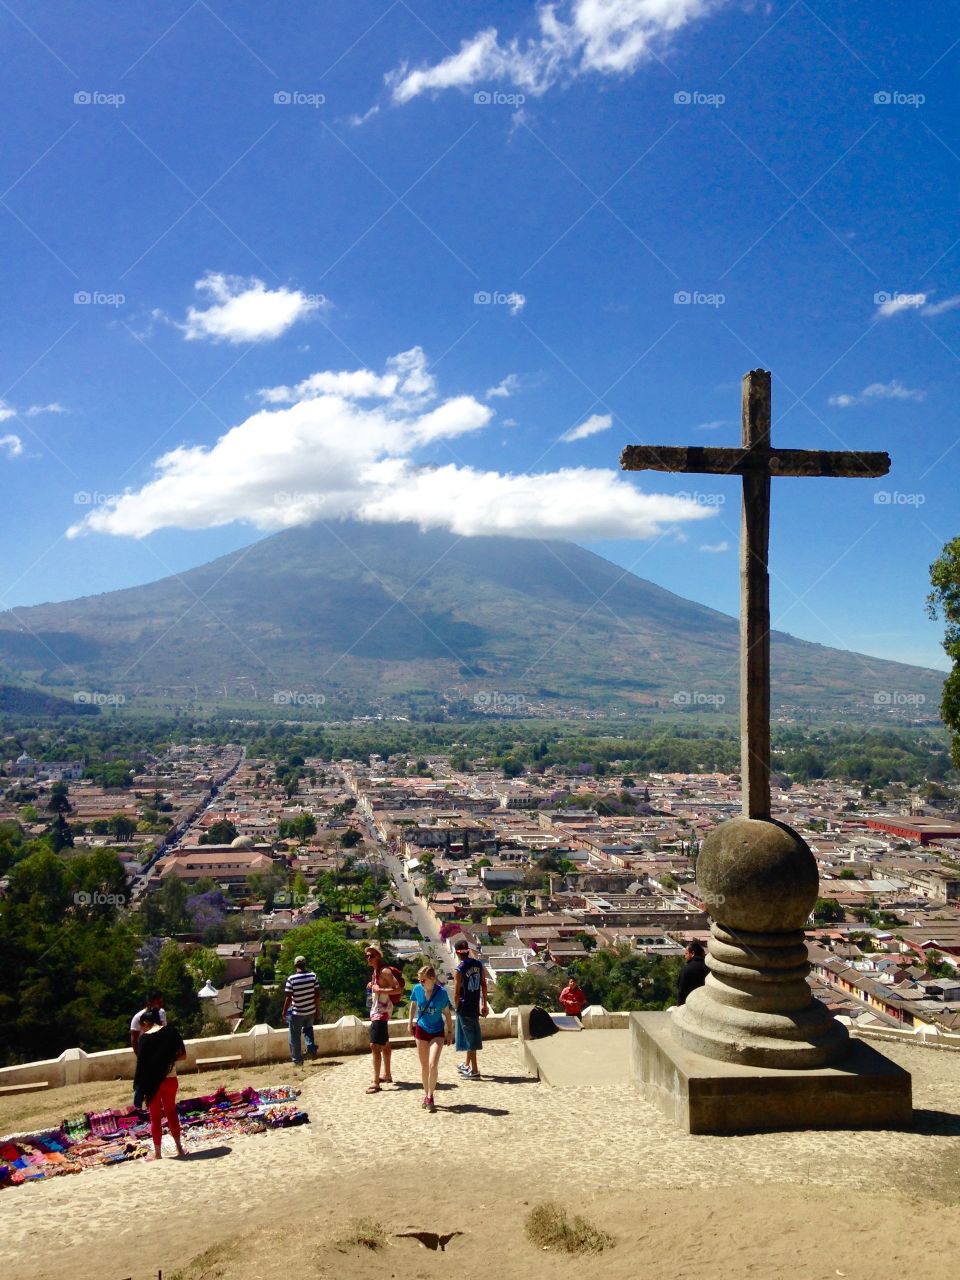 La Cruz. Antigua, Guatemala